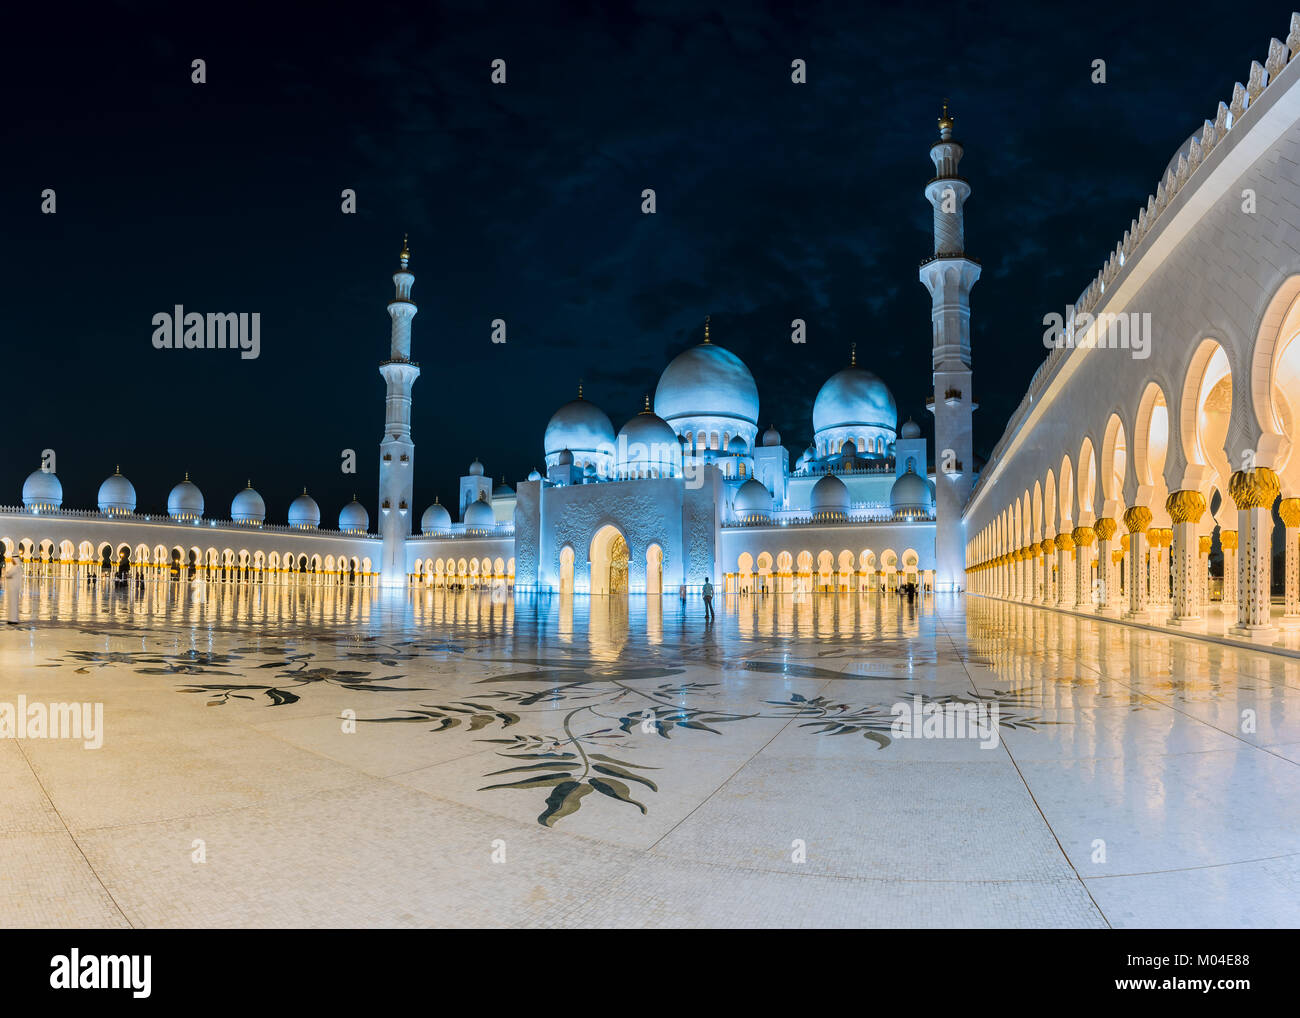 L'architettura della Sheikh Zayed Grande Moschea di Abu Dhabi, Emirati arabi uniti Foto Stock